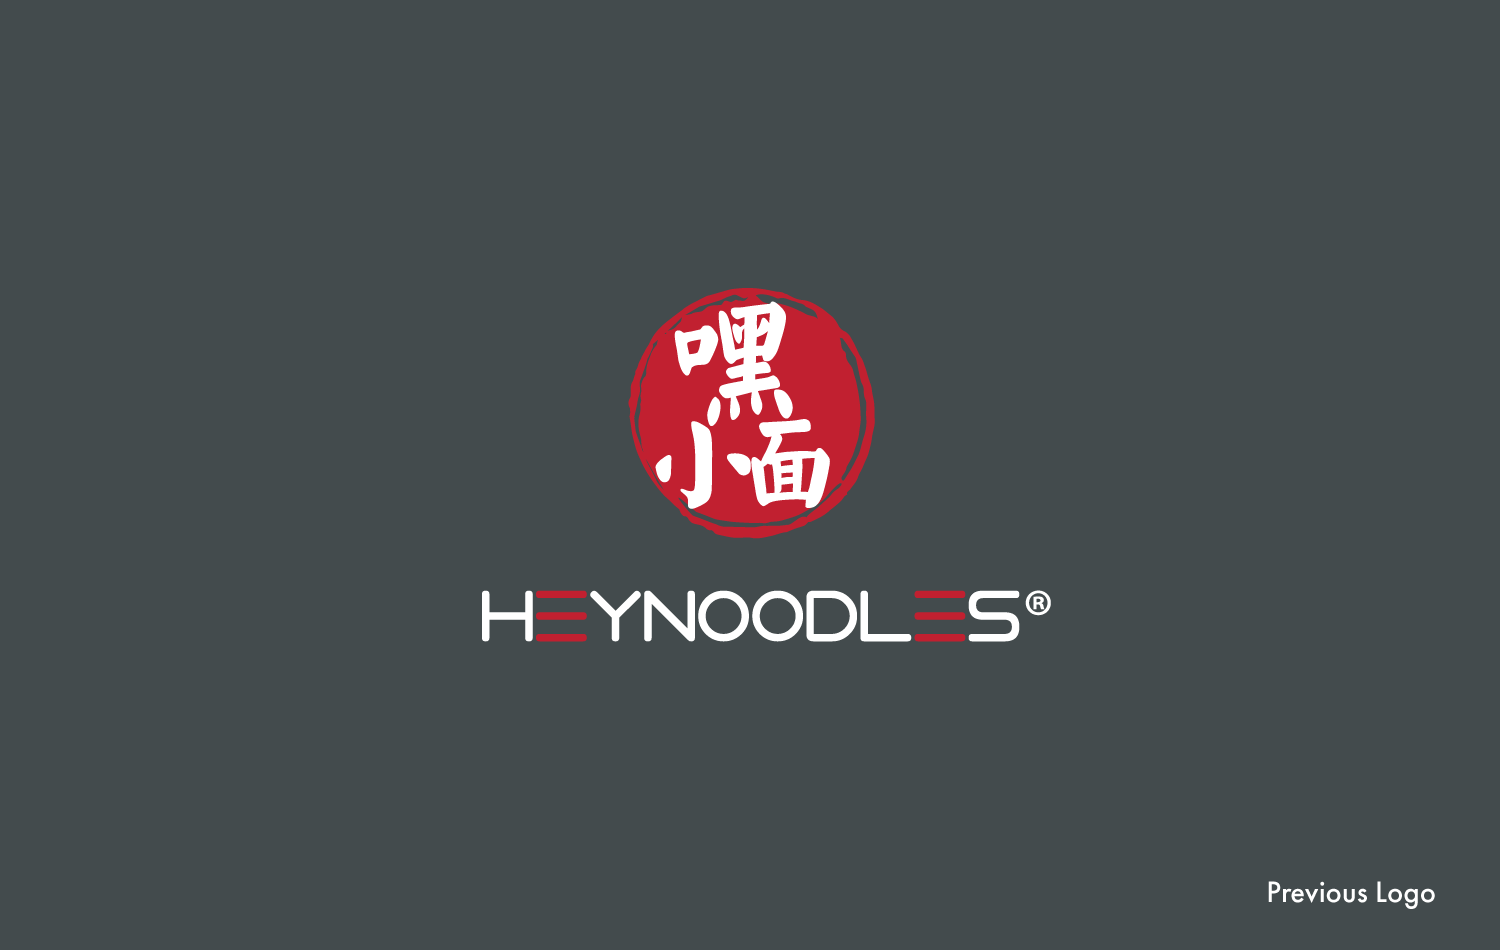 Previous Hey Noodles Logo